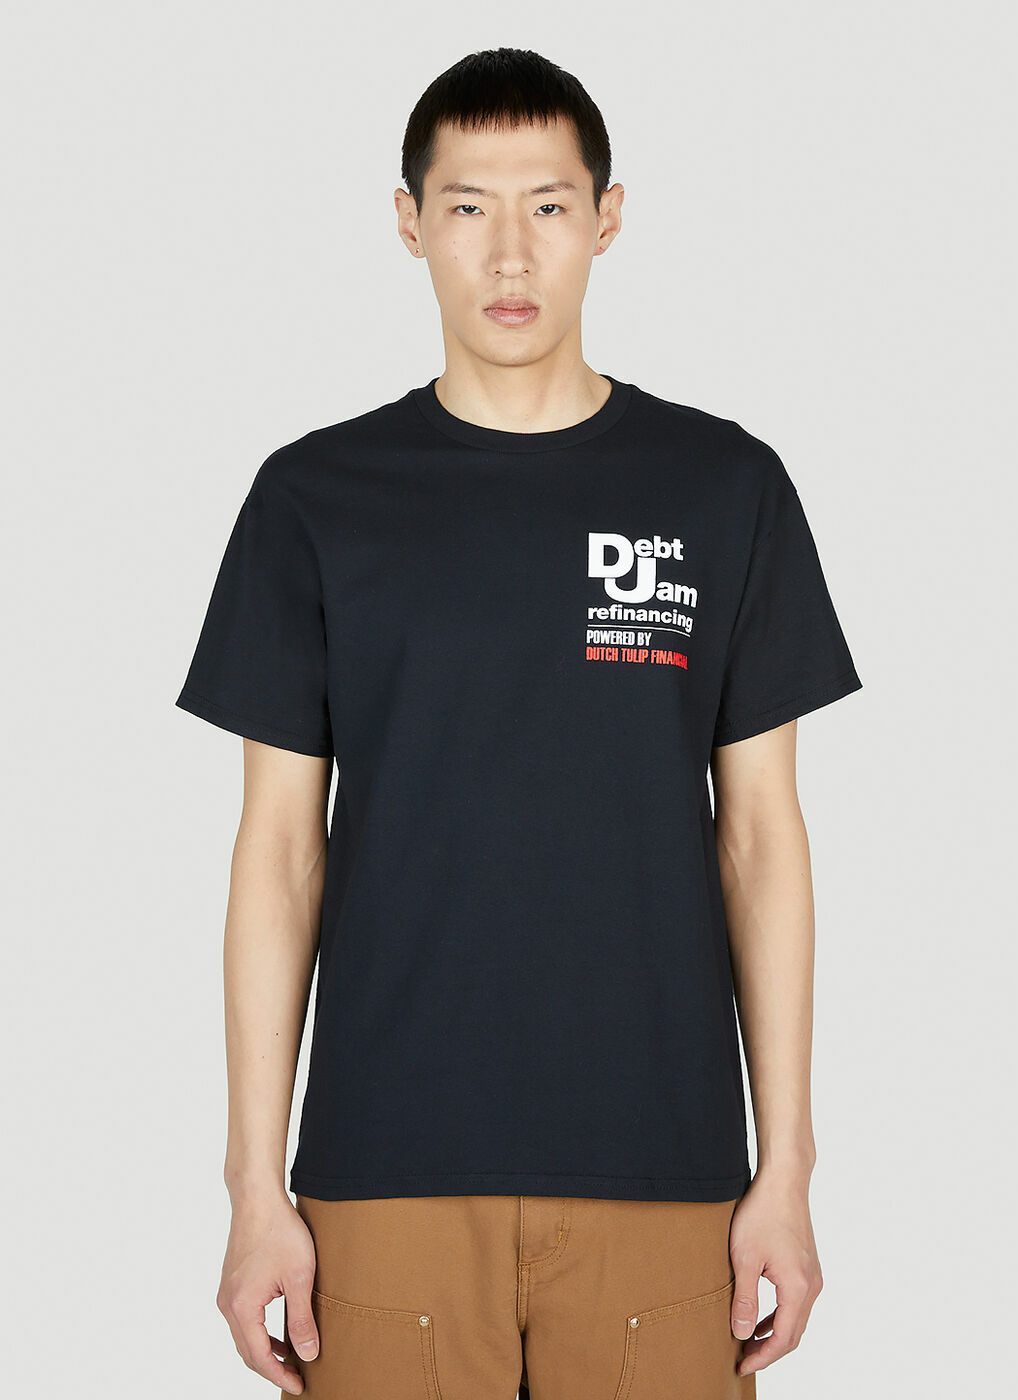 DTF.NYC - Debt Jam Short-Sleeved T-shirt in Black